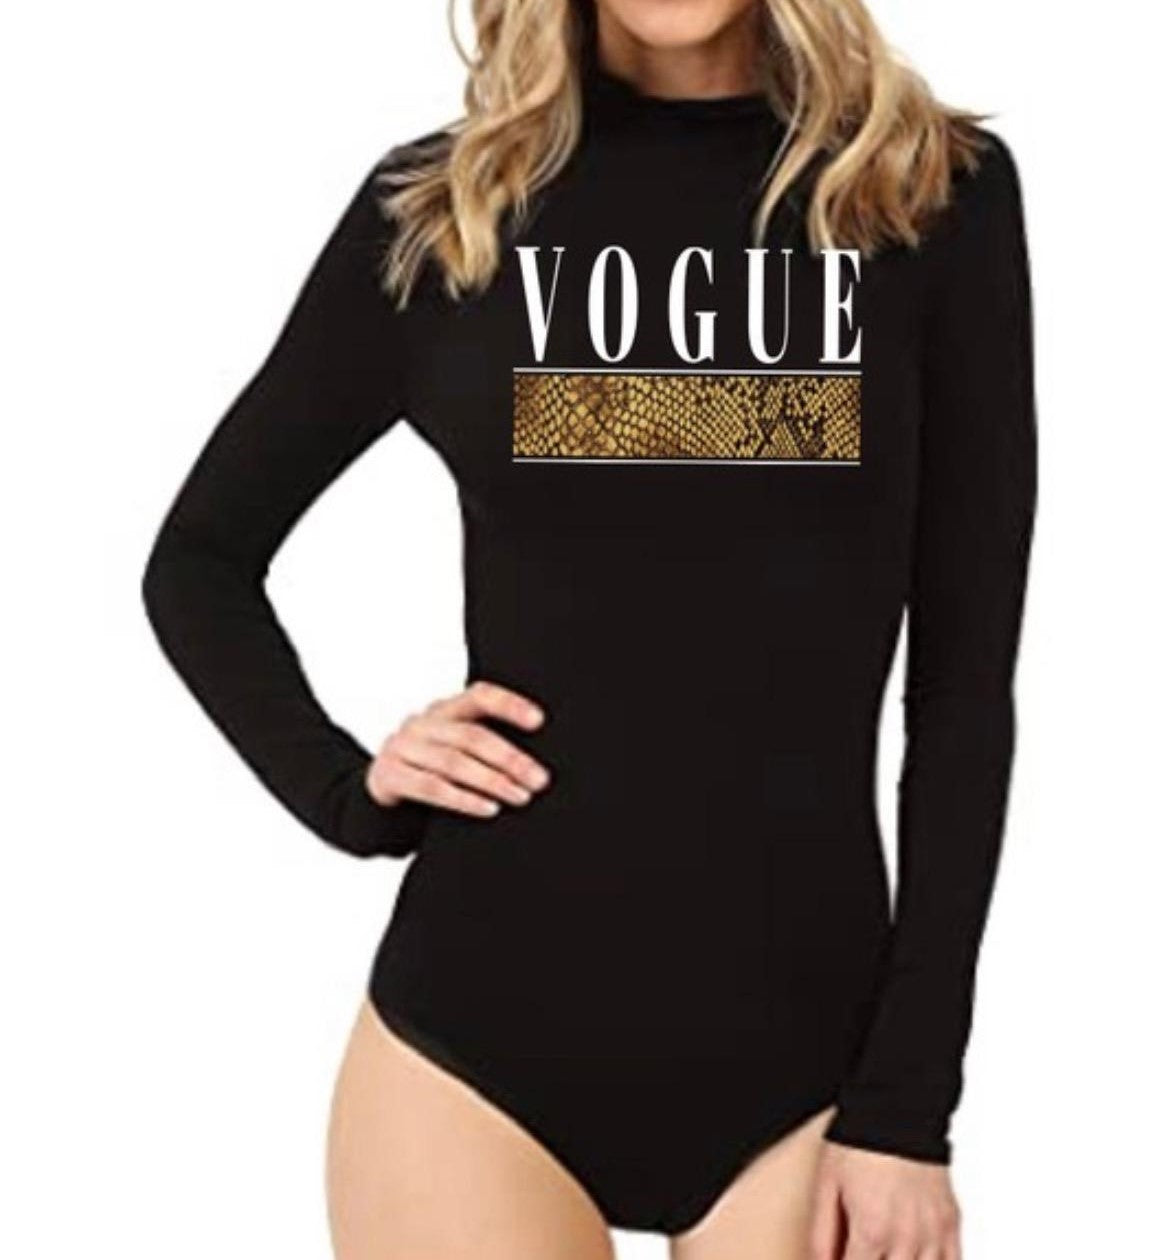 Vogue Bodysuit